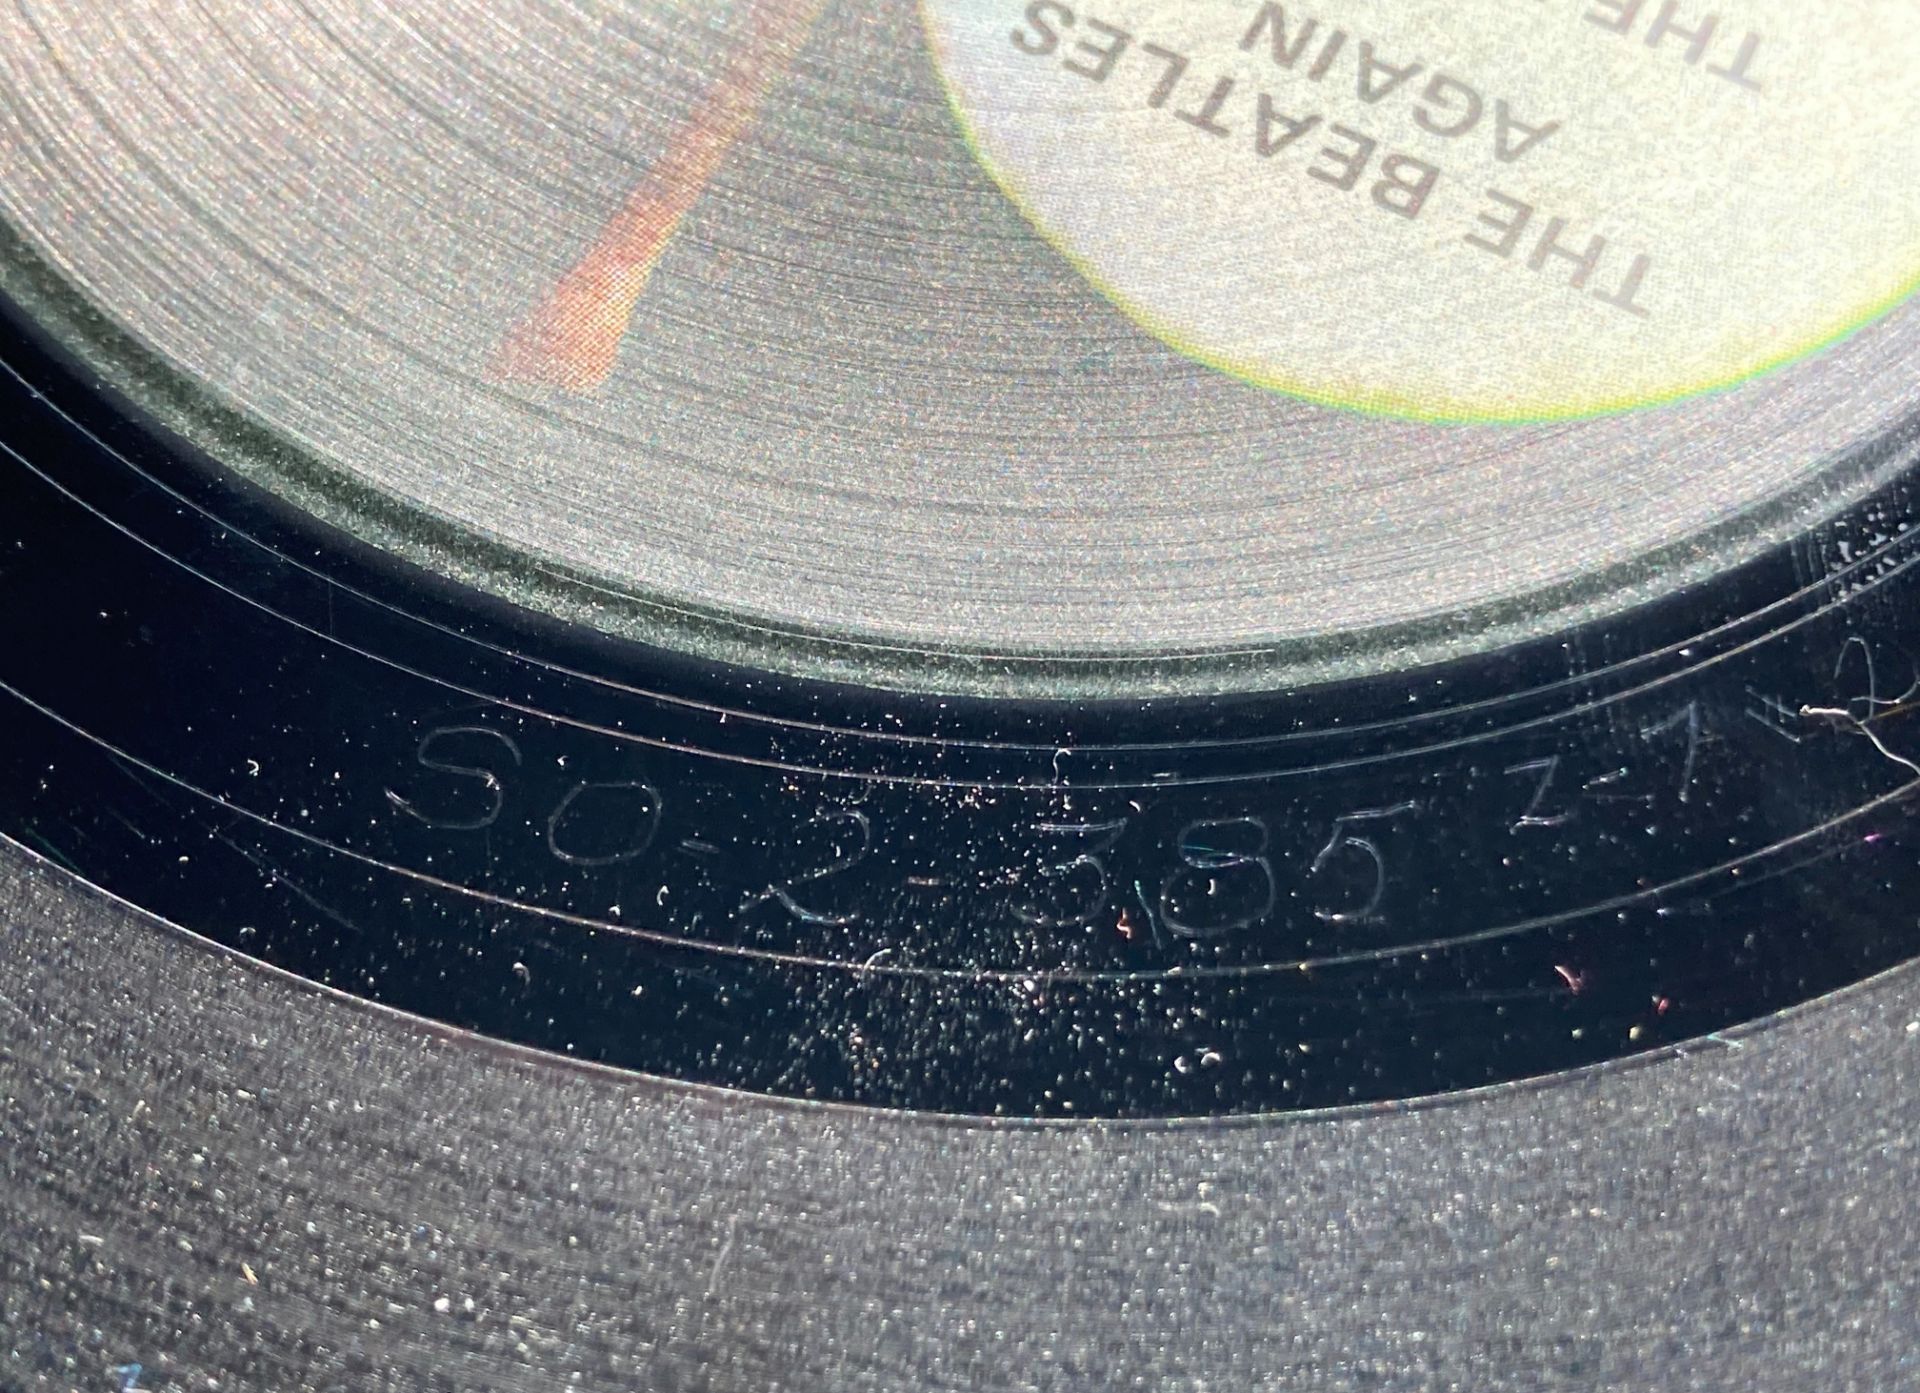 Rare Beatles Album 'Hey Jude' on Apple SG-385 (Saleroom location: S3 Counter) - Image 10 of 14